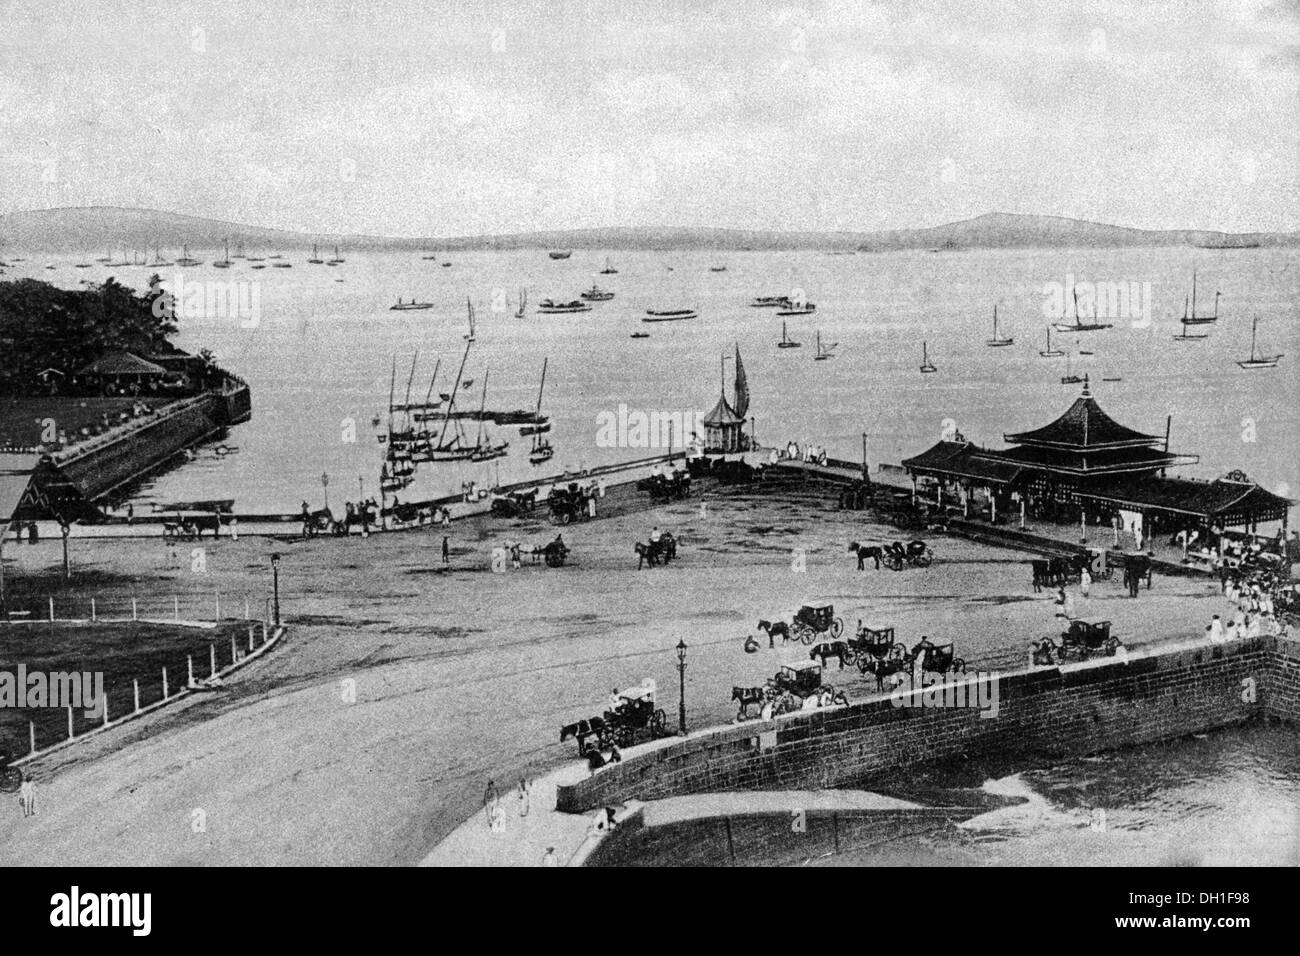 Old vintage 1900s Wellington Pier Gateway Of India Apollo Bander Colaba Bombay Mumbai Maharashtra India Asia Asian Indian Stock Photo